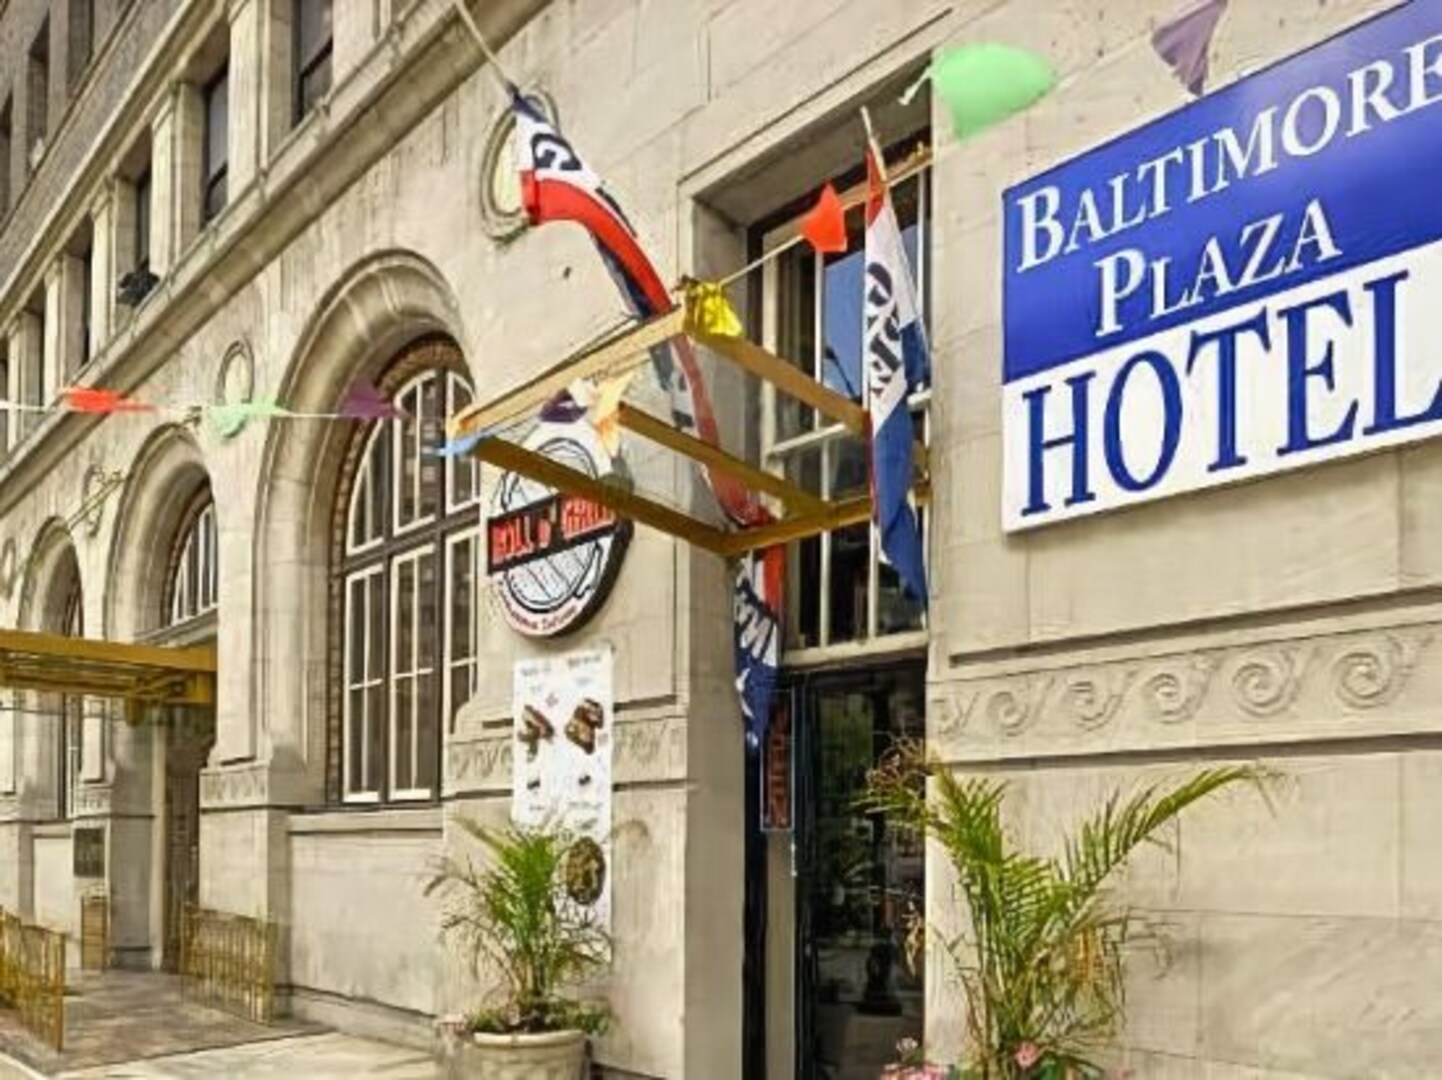 Baltimore Plaza Hotel